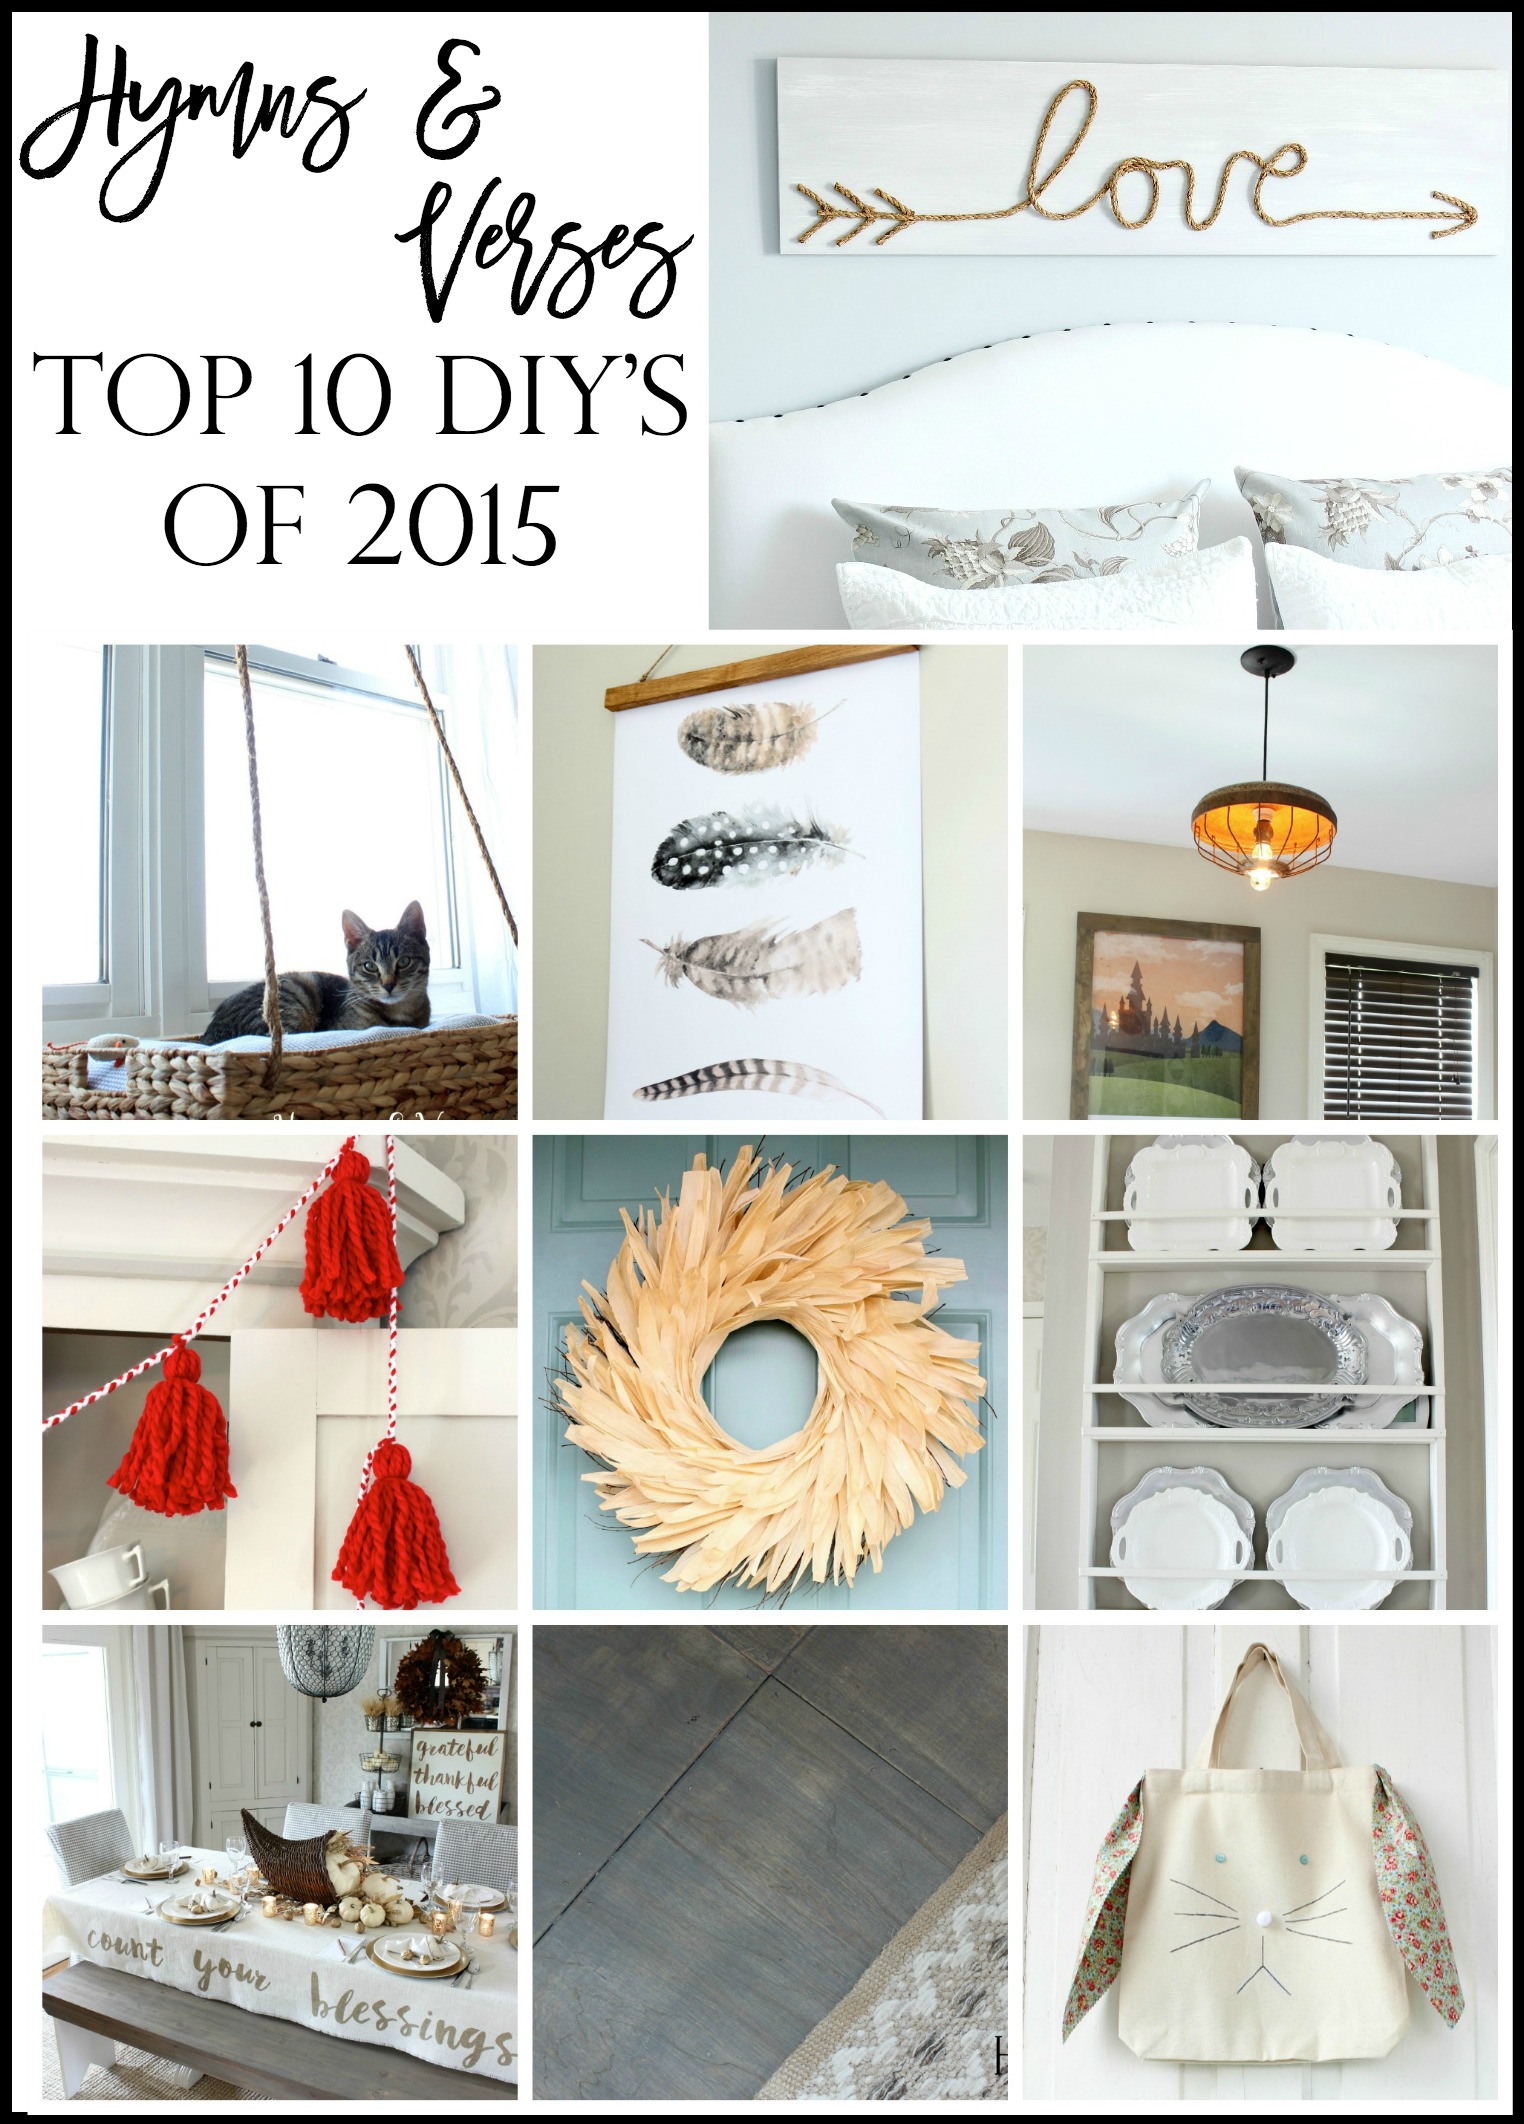 Top 10 DIY's of 2015